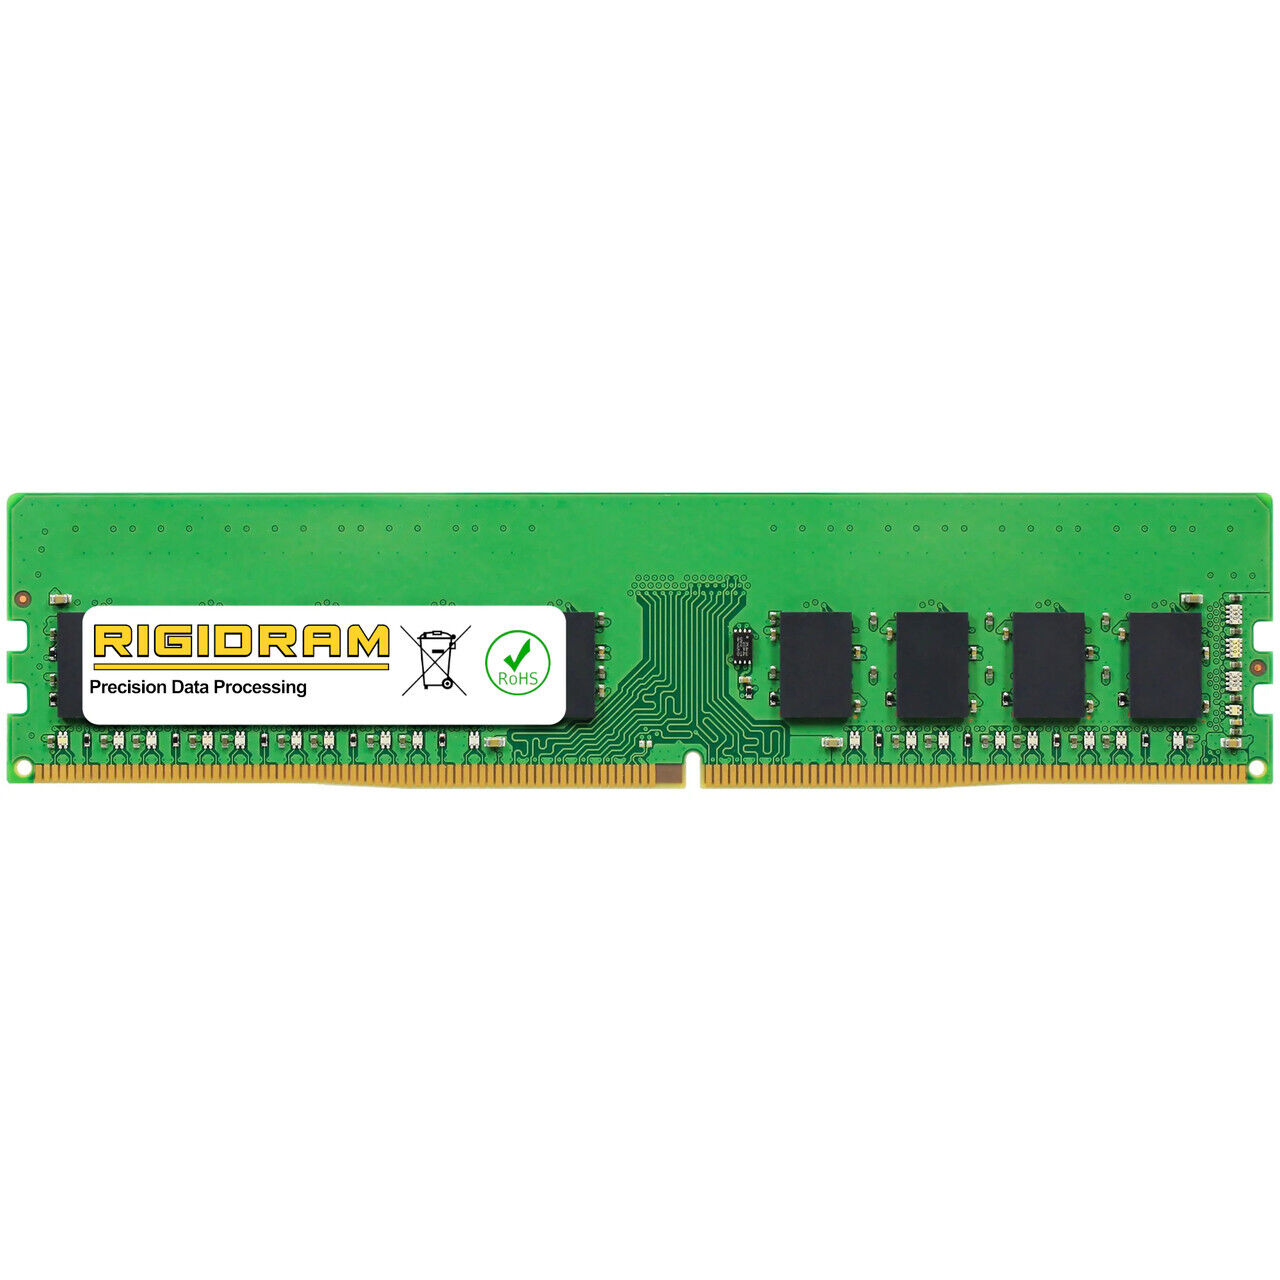 16GB SNP7XRW4C/16G A8661096 DDR4 2133MHz RigidRAM ECC UDIMM Memory for Dell